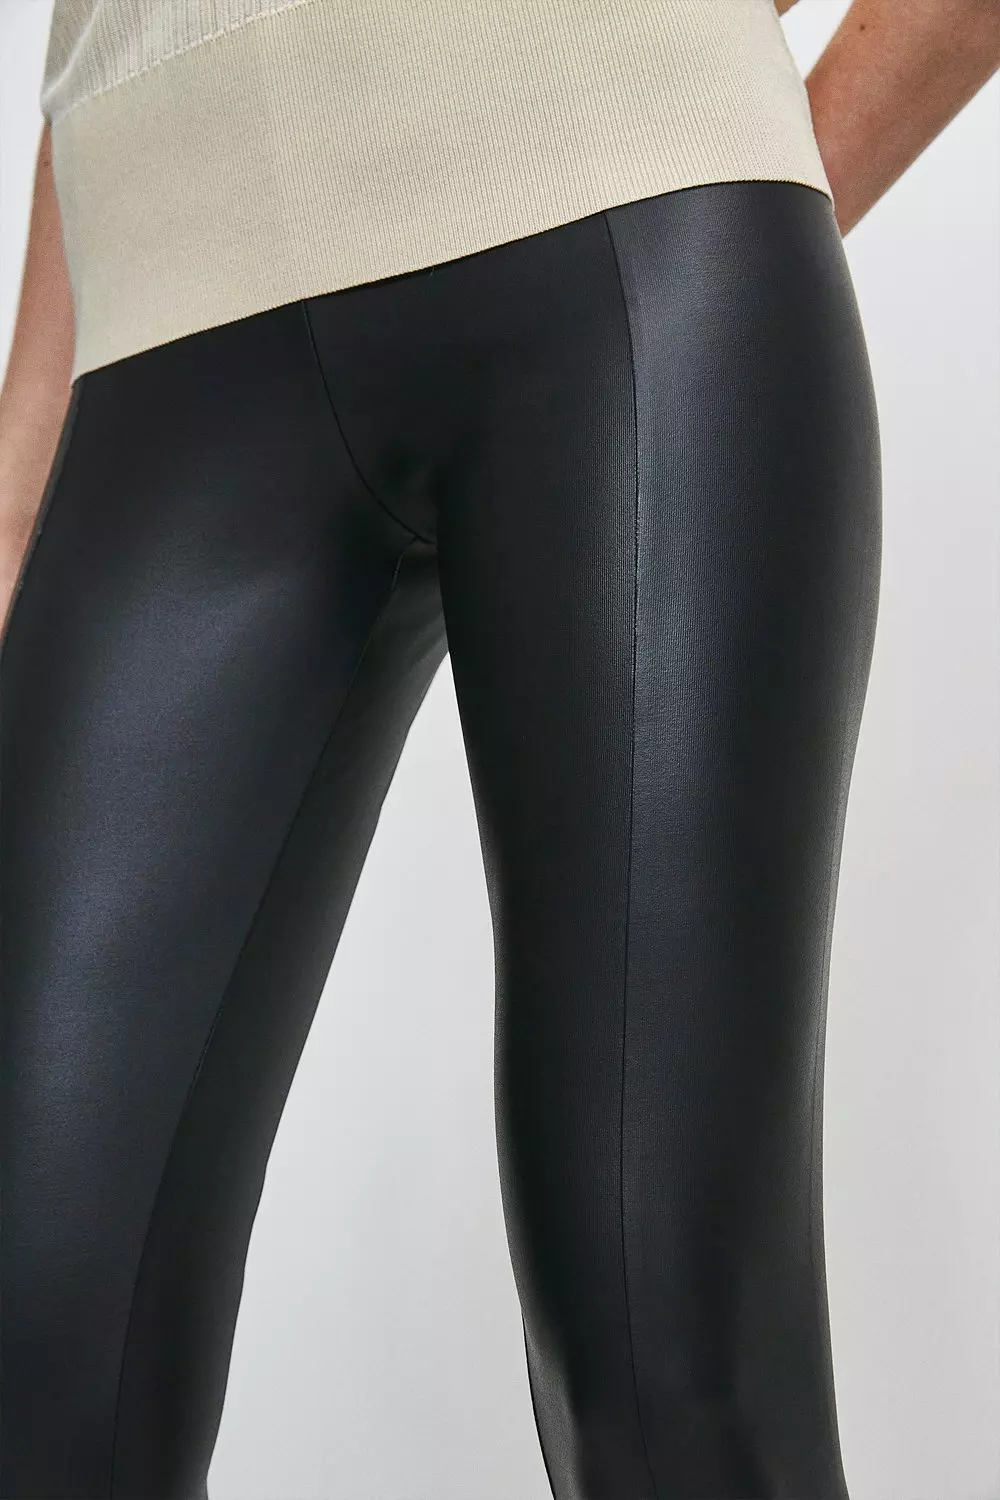 Seam Detail Faux Leather Legging | Karen Millen